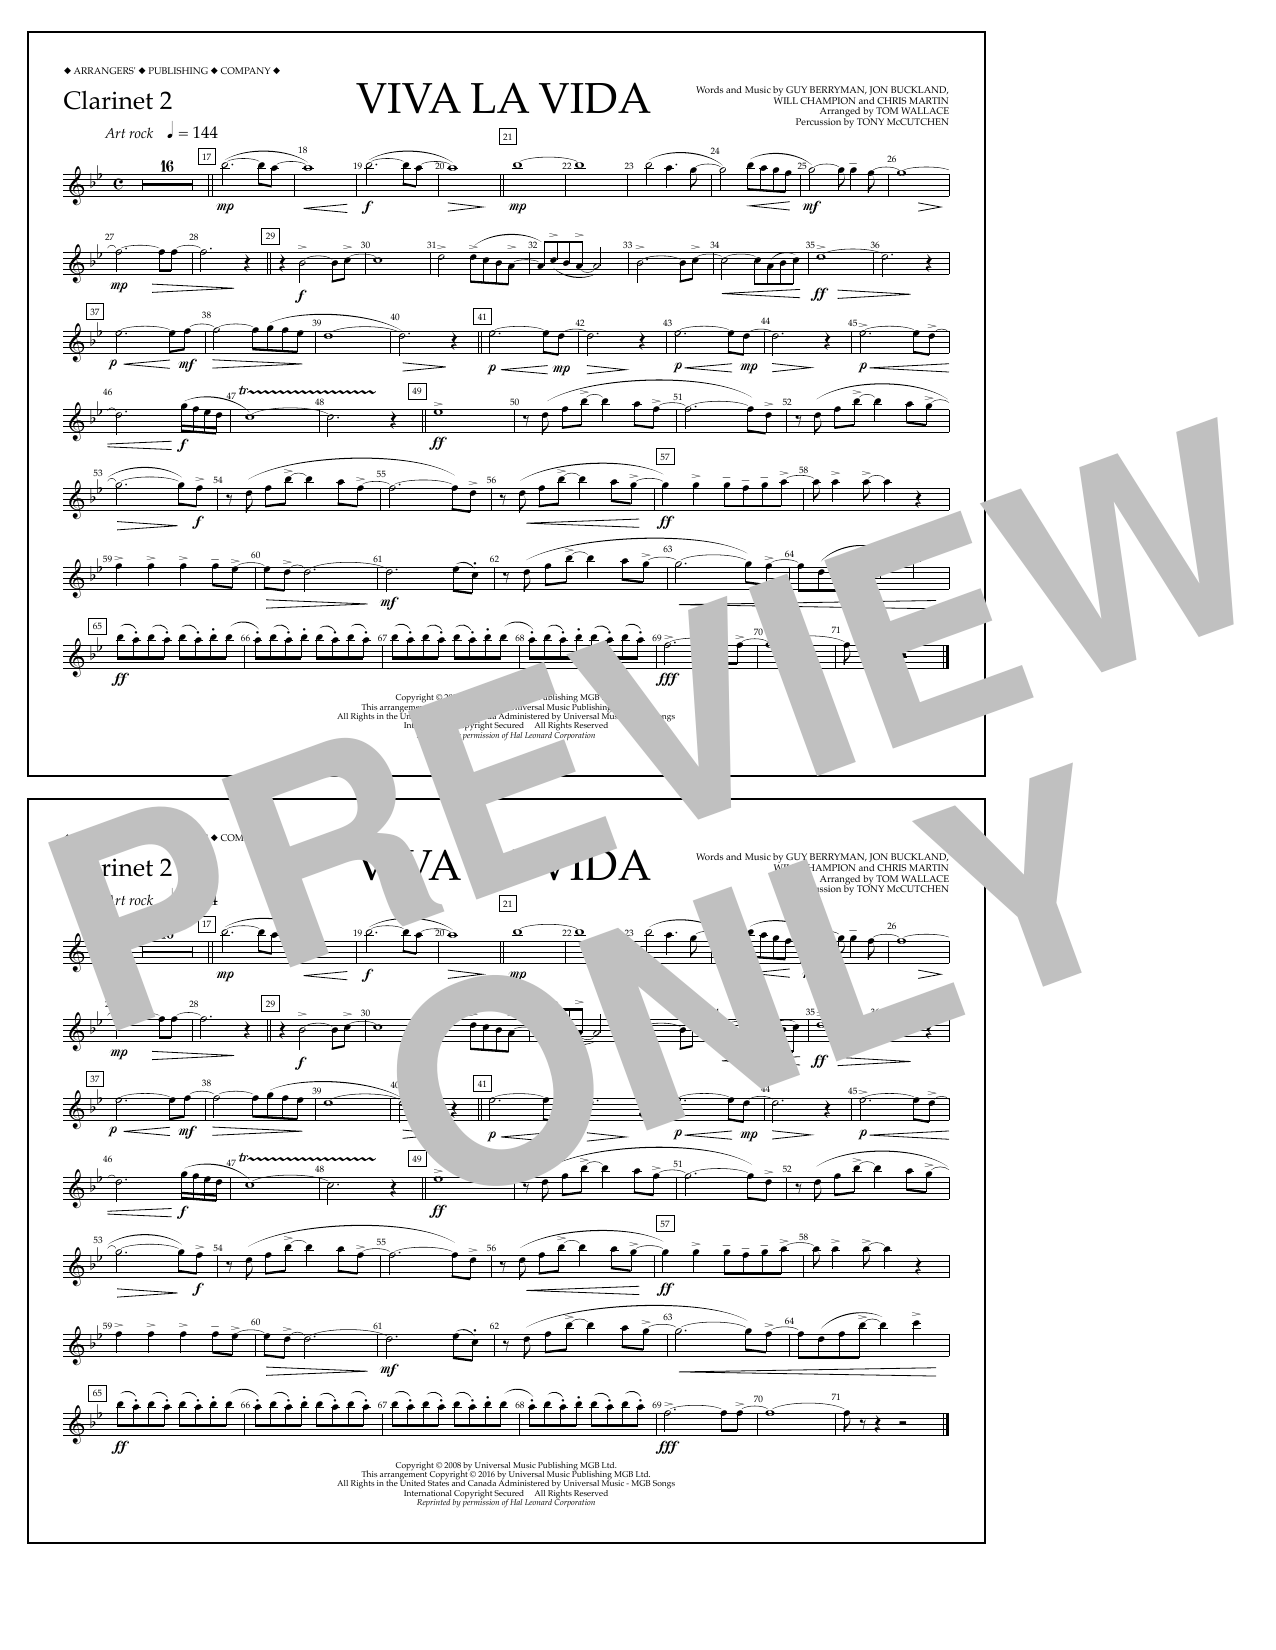 Tom Wallace Viva La Vida - Clarinet 2 Sheet Music Notes & Chords for Marching Band - Download or Print PDF